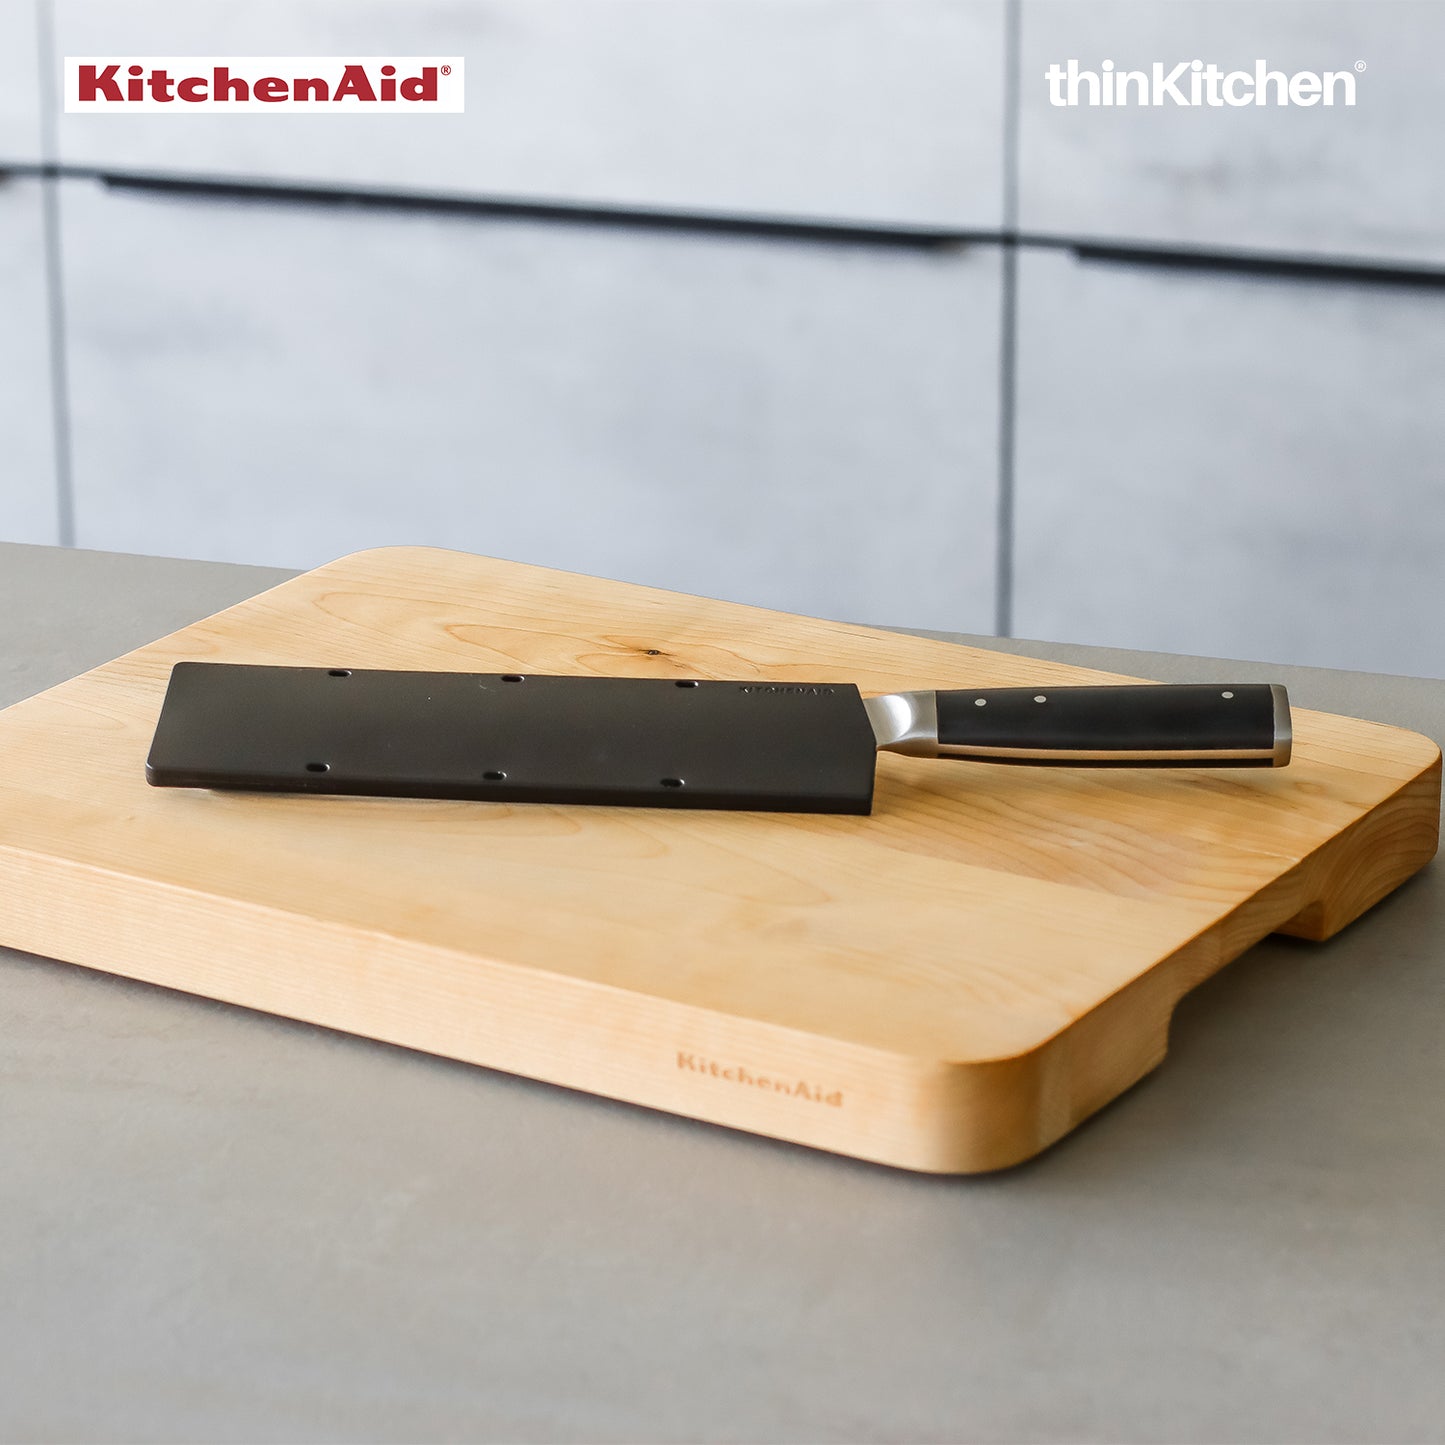 Kitchenaid Gourmet Stainless Steel Santoku Knife